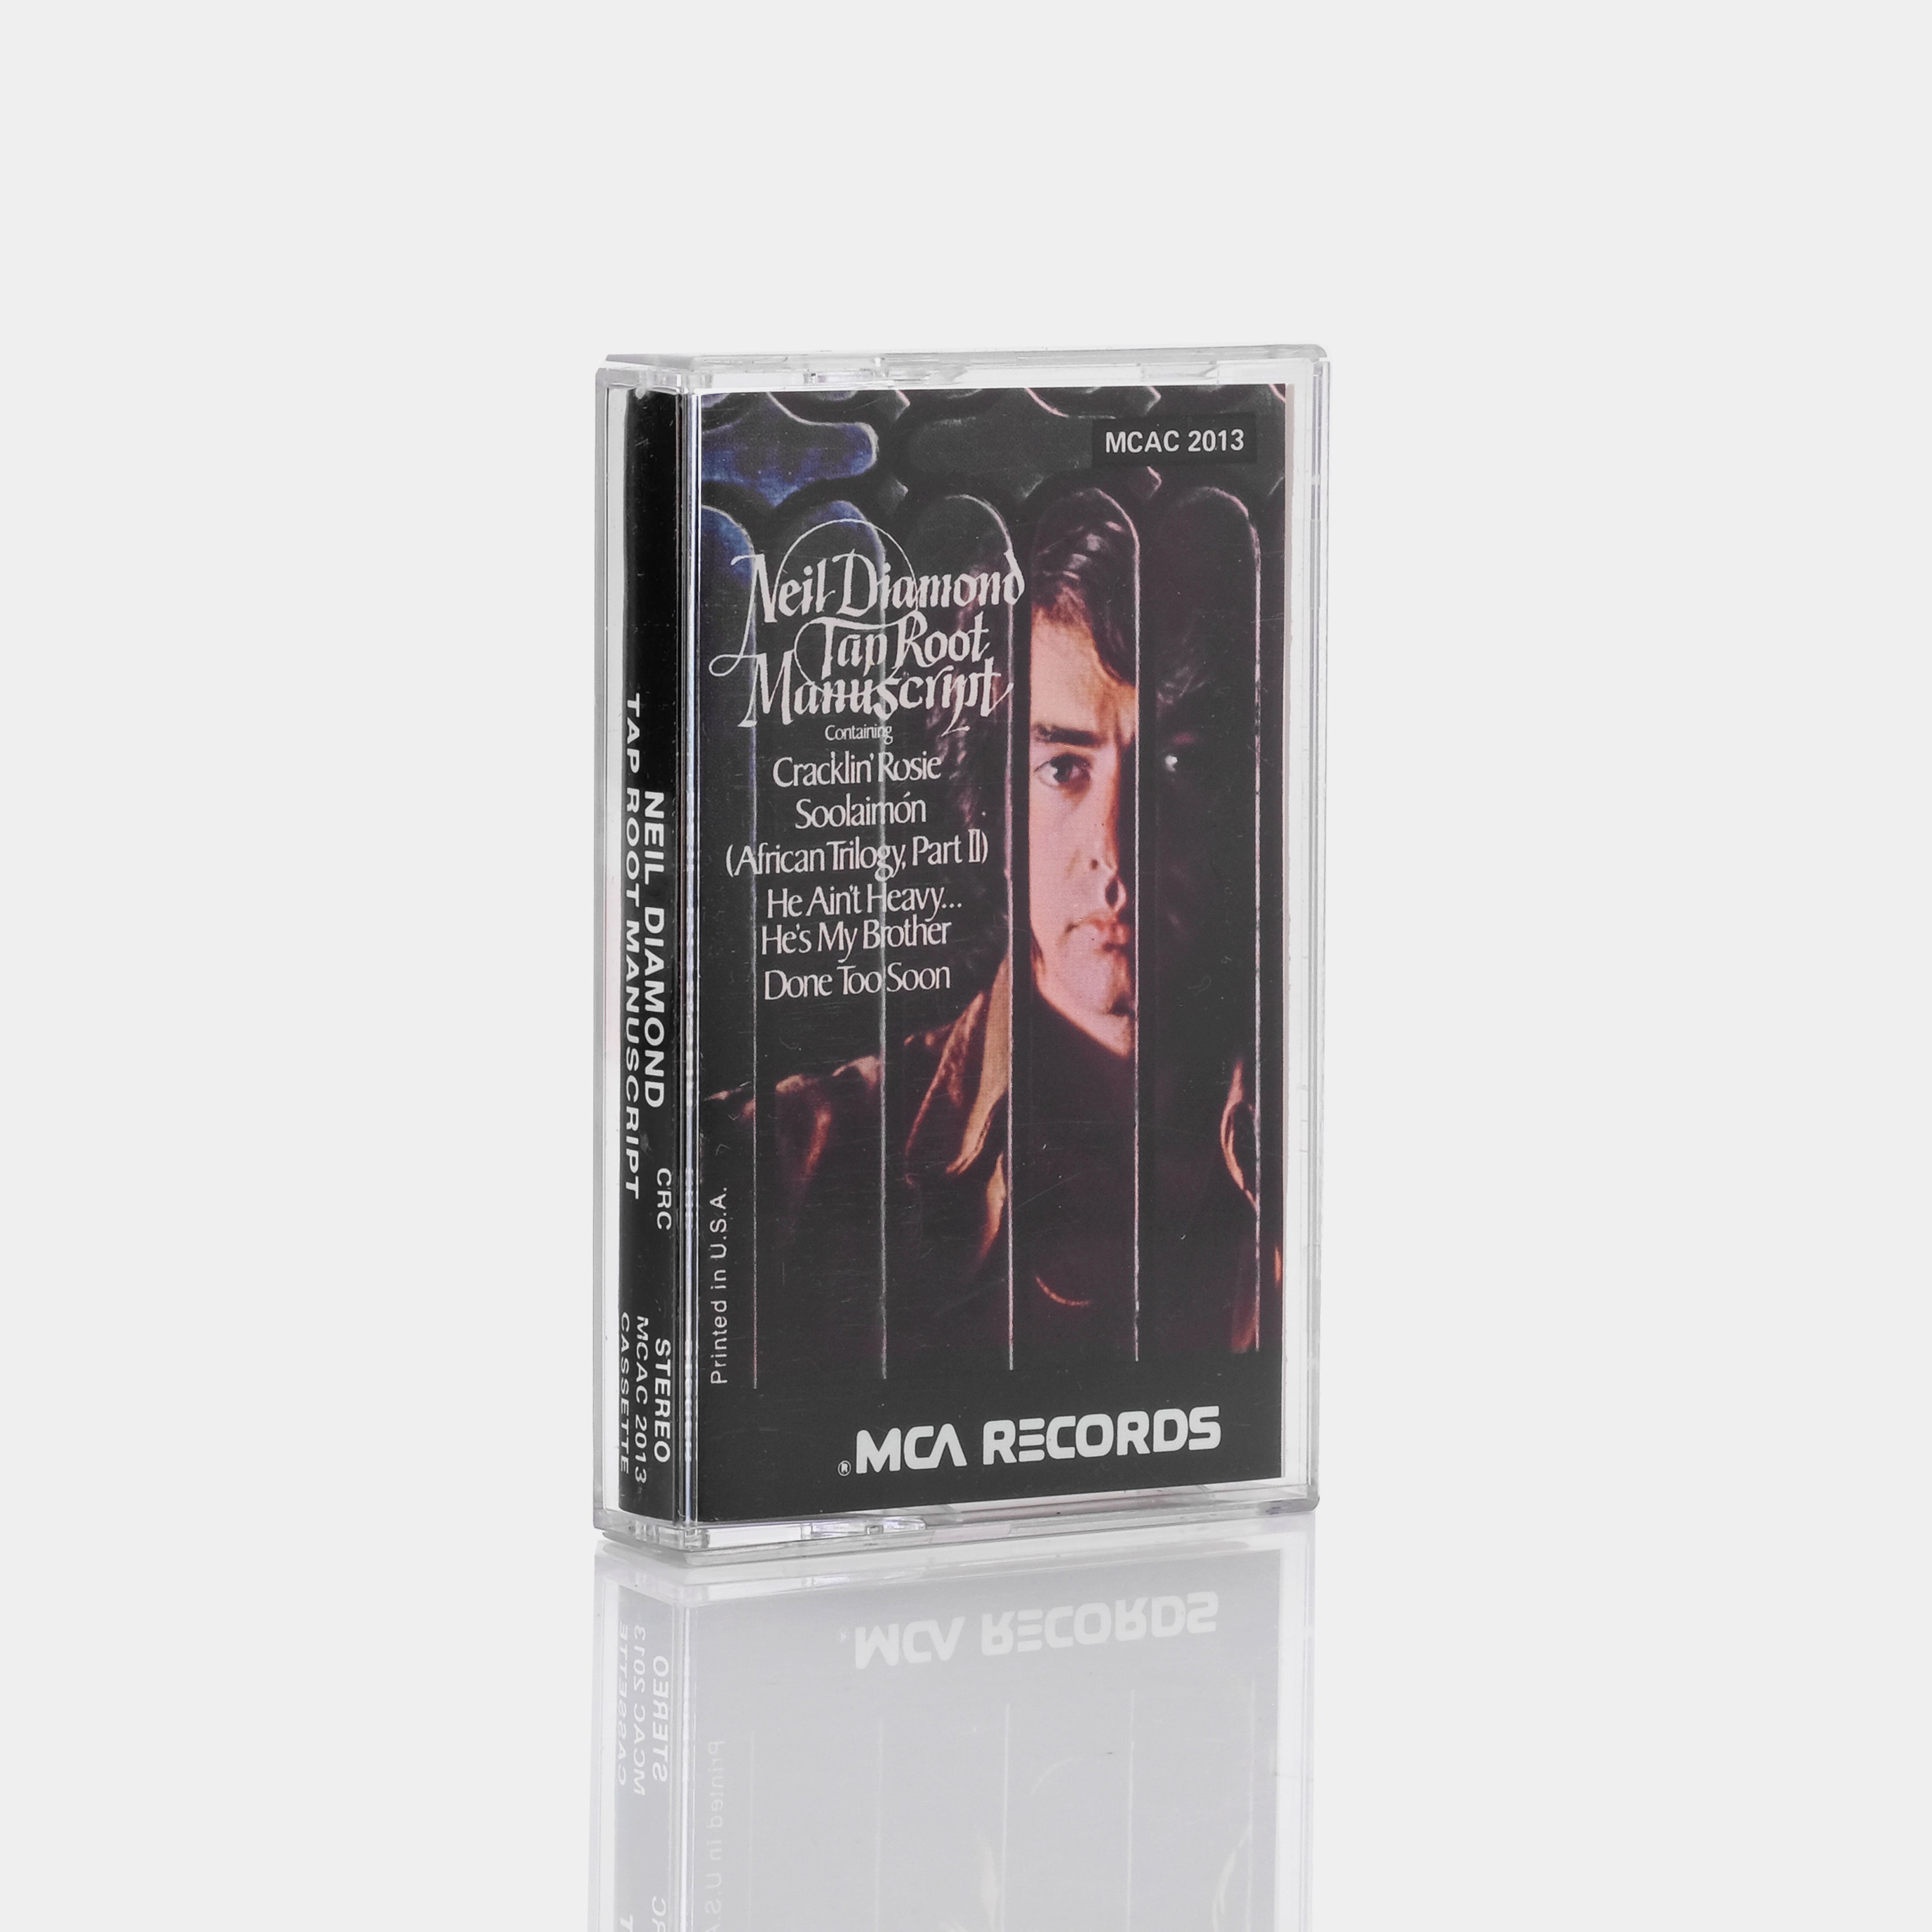 Neil Diamond - Tap Root Manuscript Cassette Tape